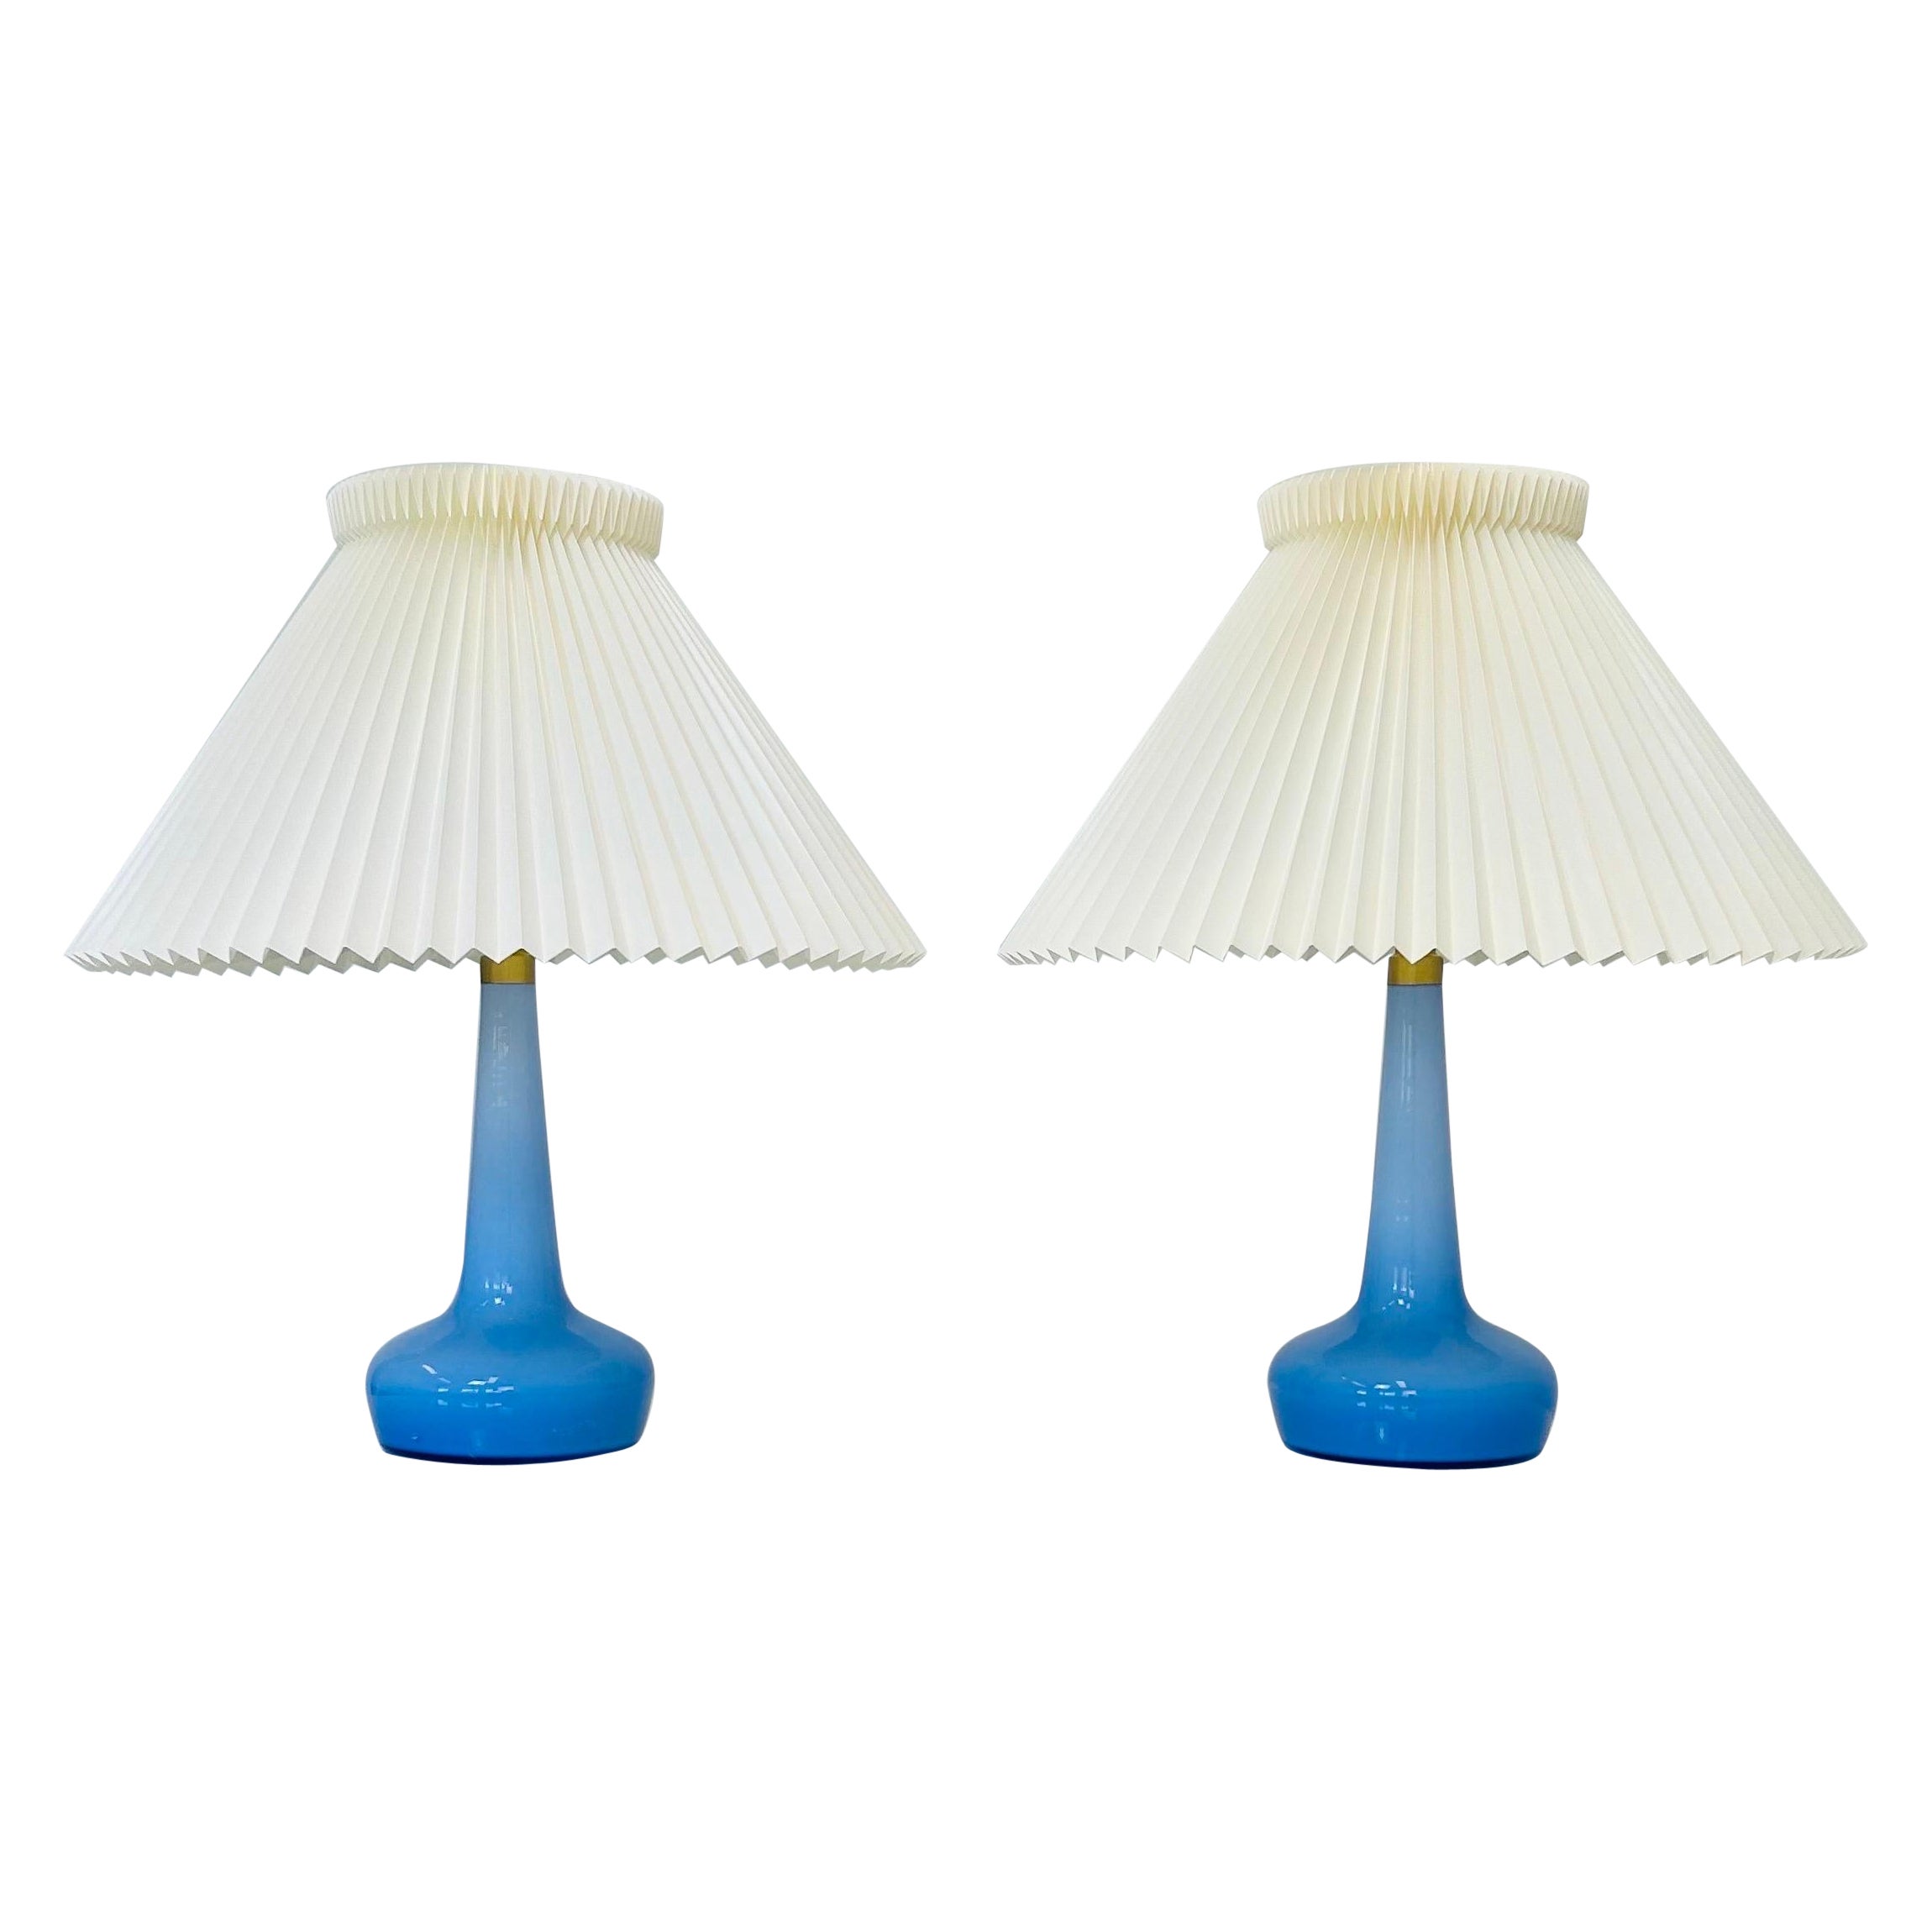 Set of Danish Modern Le Klint Glass Table Lamps, Denmark